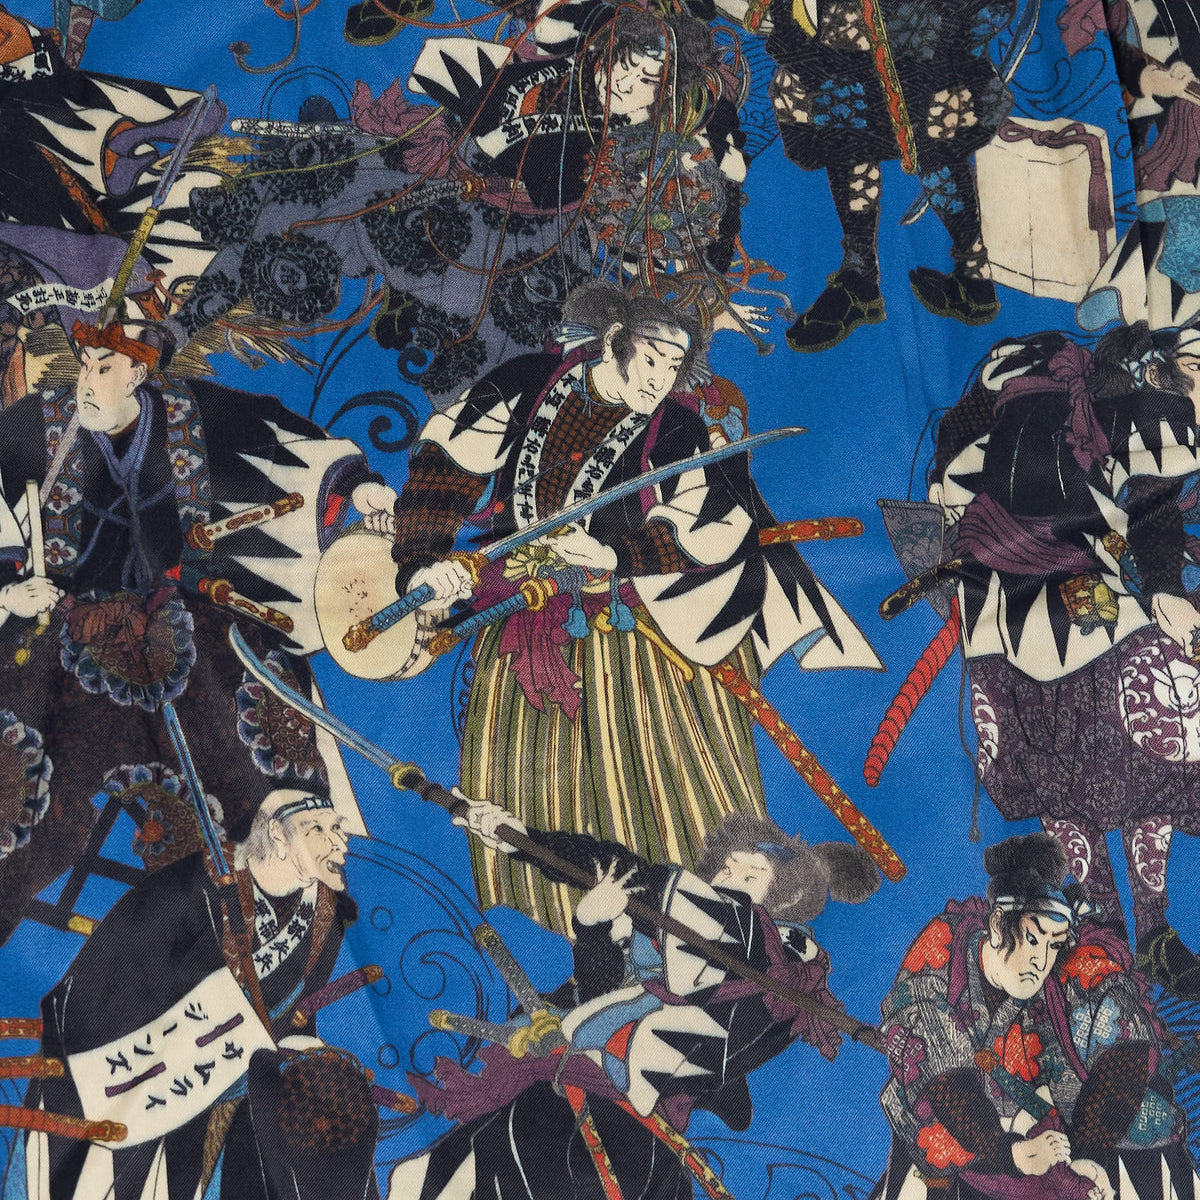 Samurai Jeans 25th. Anniversary Japanes Fighter Hawaiian Shirt